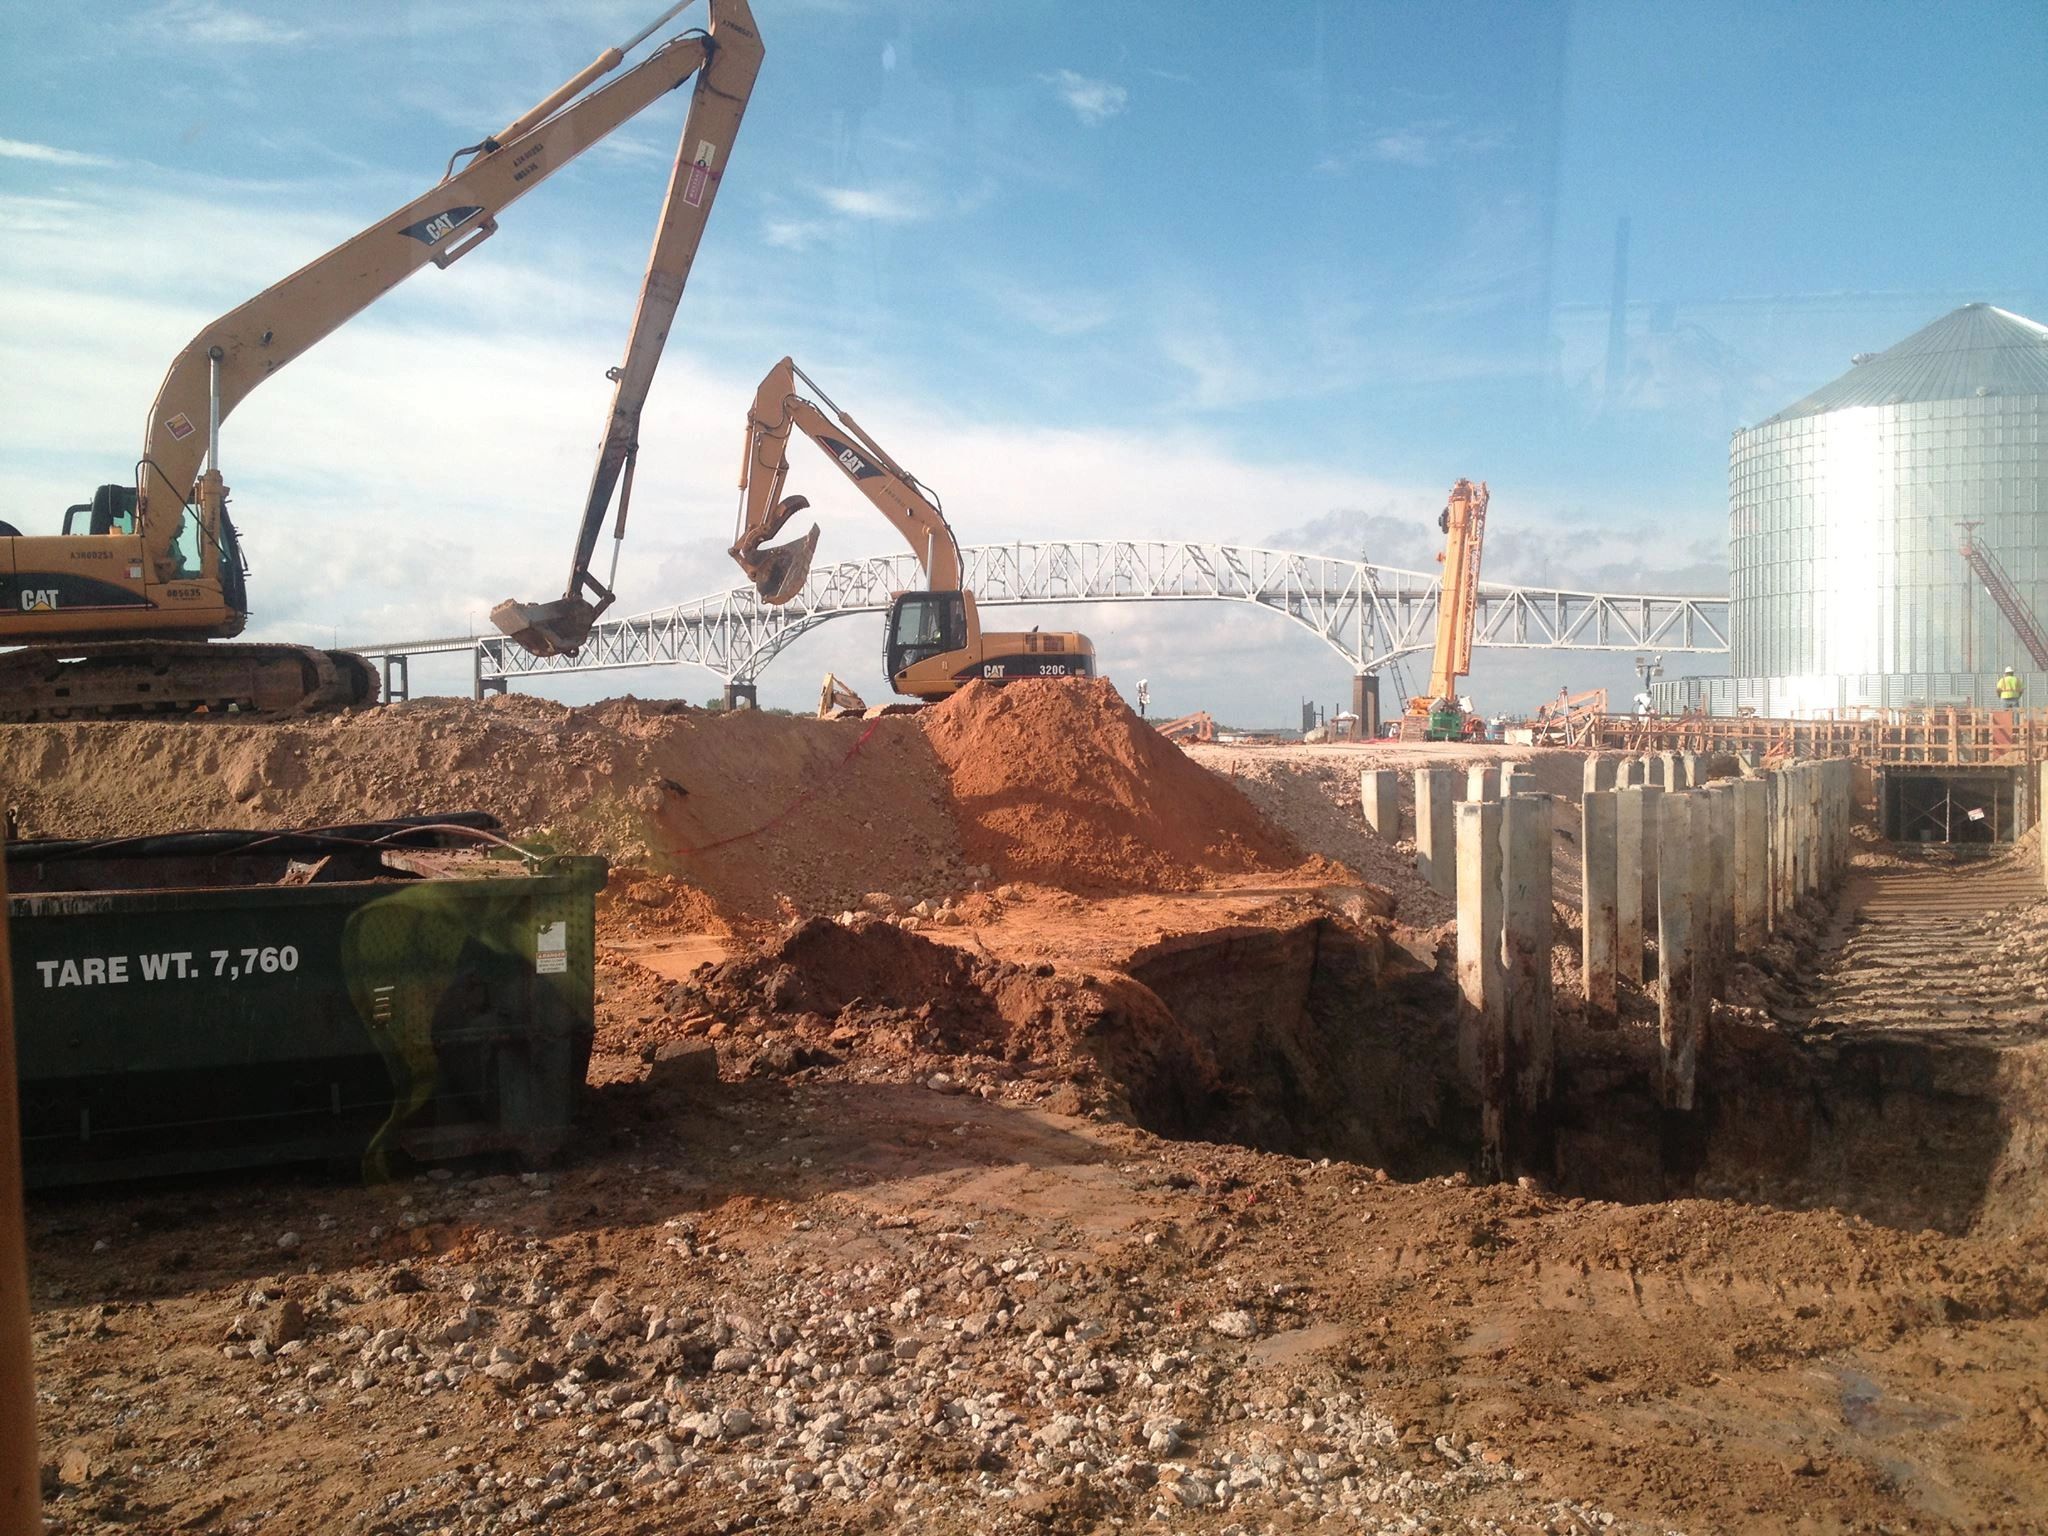 CLAYBAR CONSTRUCTION - Orange, Texas - Demolition Services - Phone